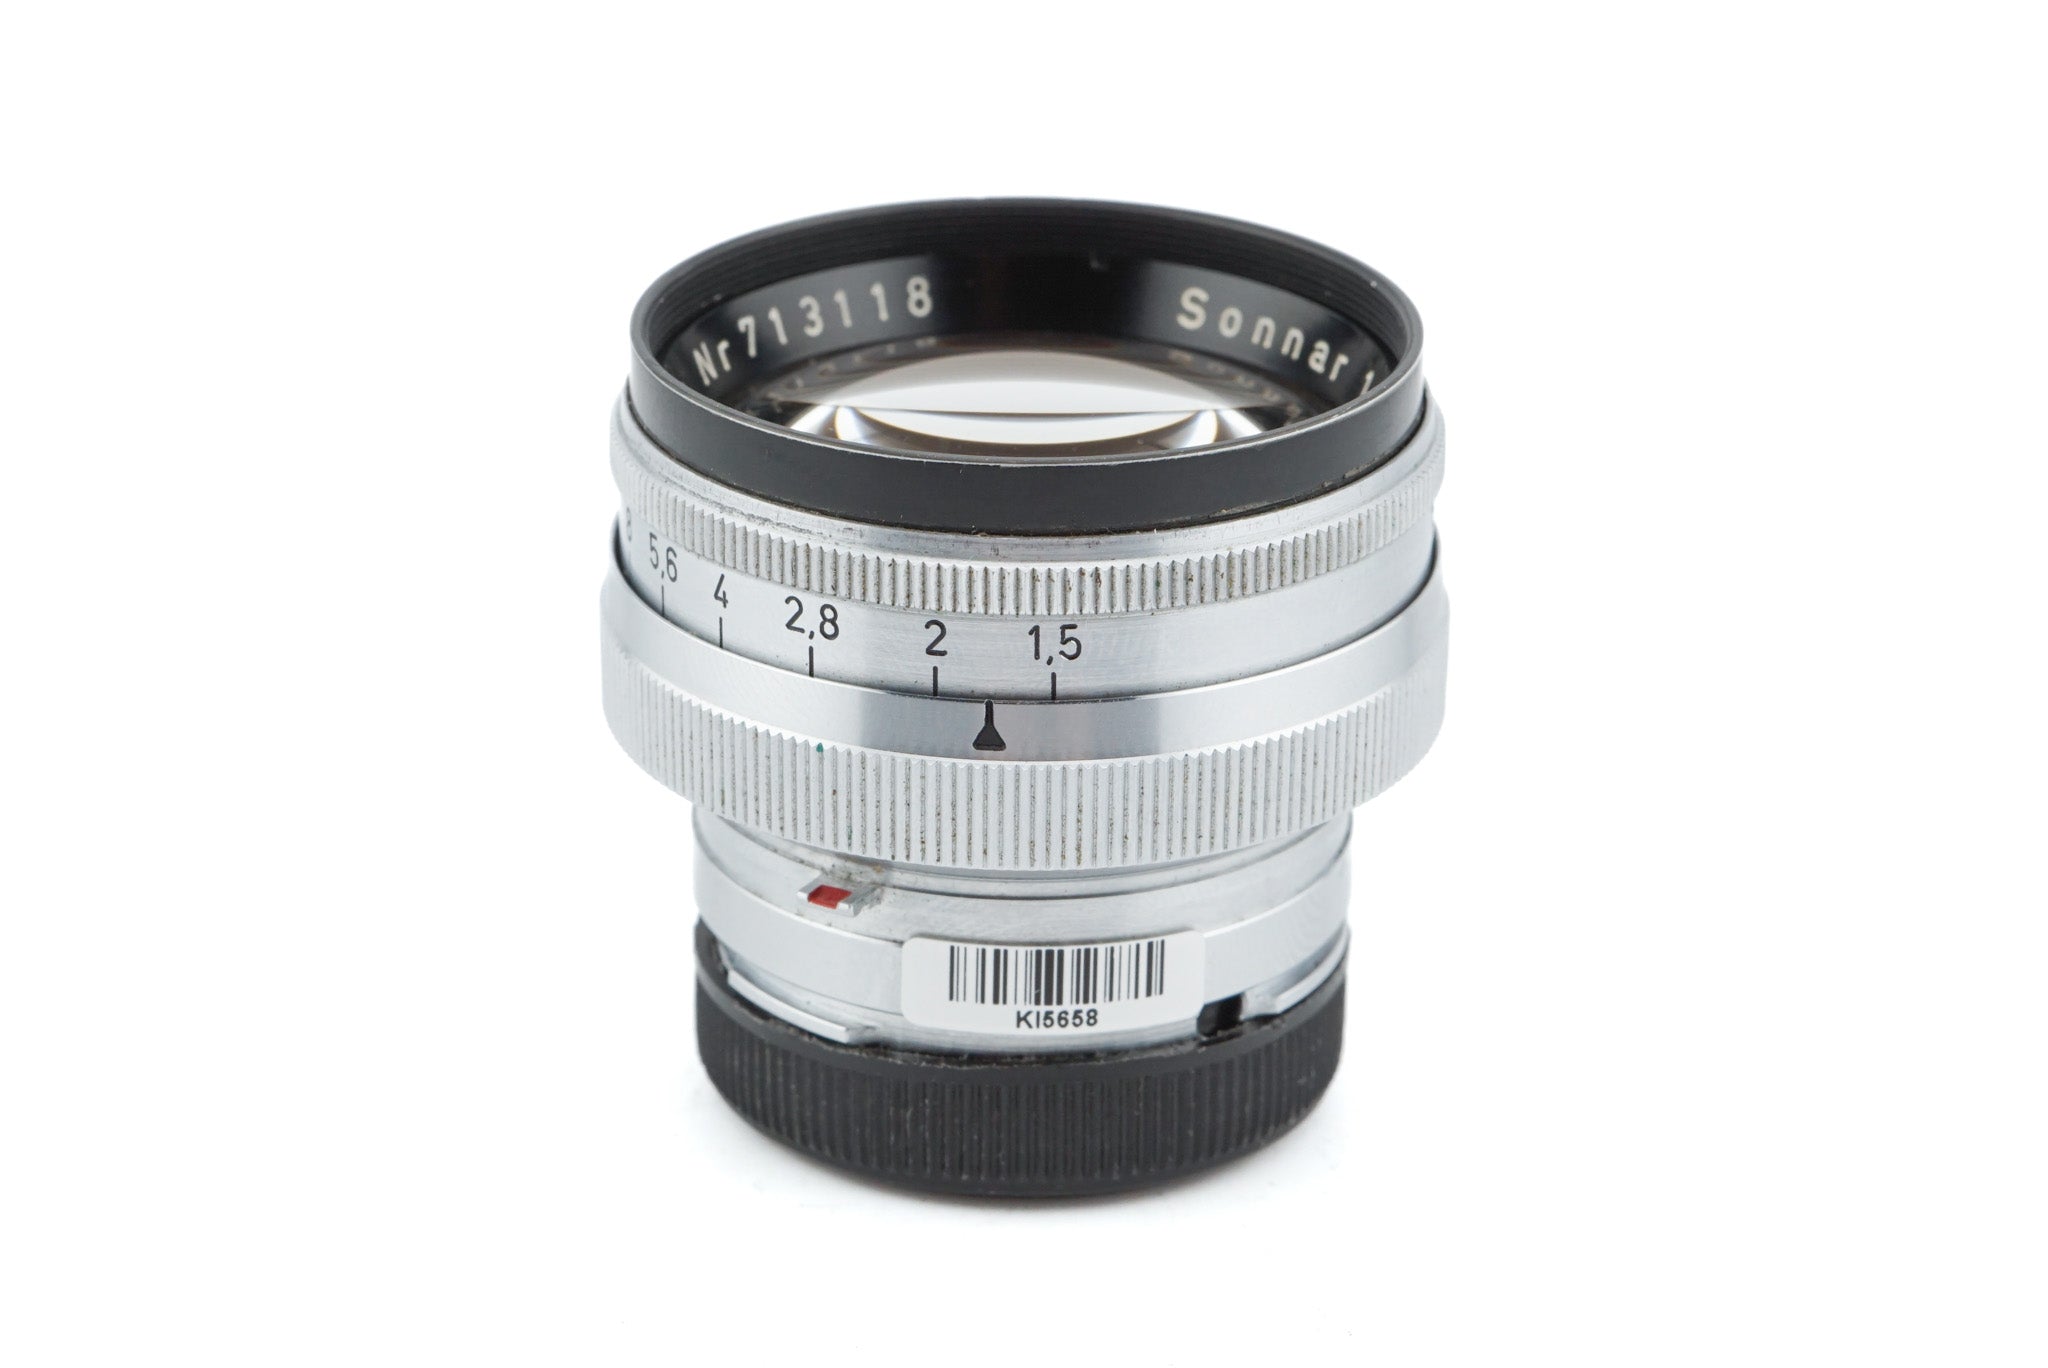 Carl Zeiss 50mm f1.5 Sonnar Opton T - Lens